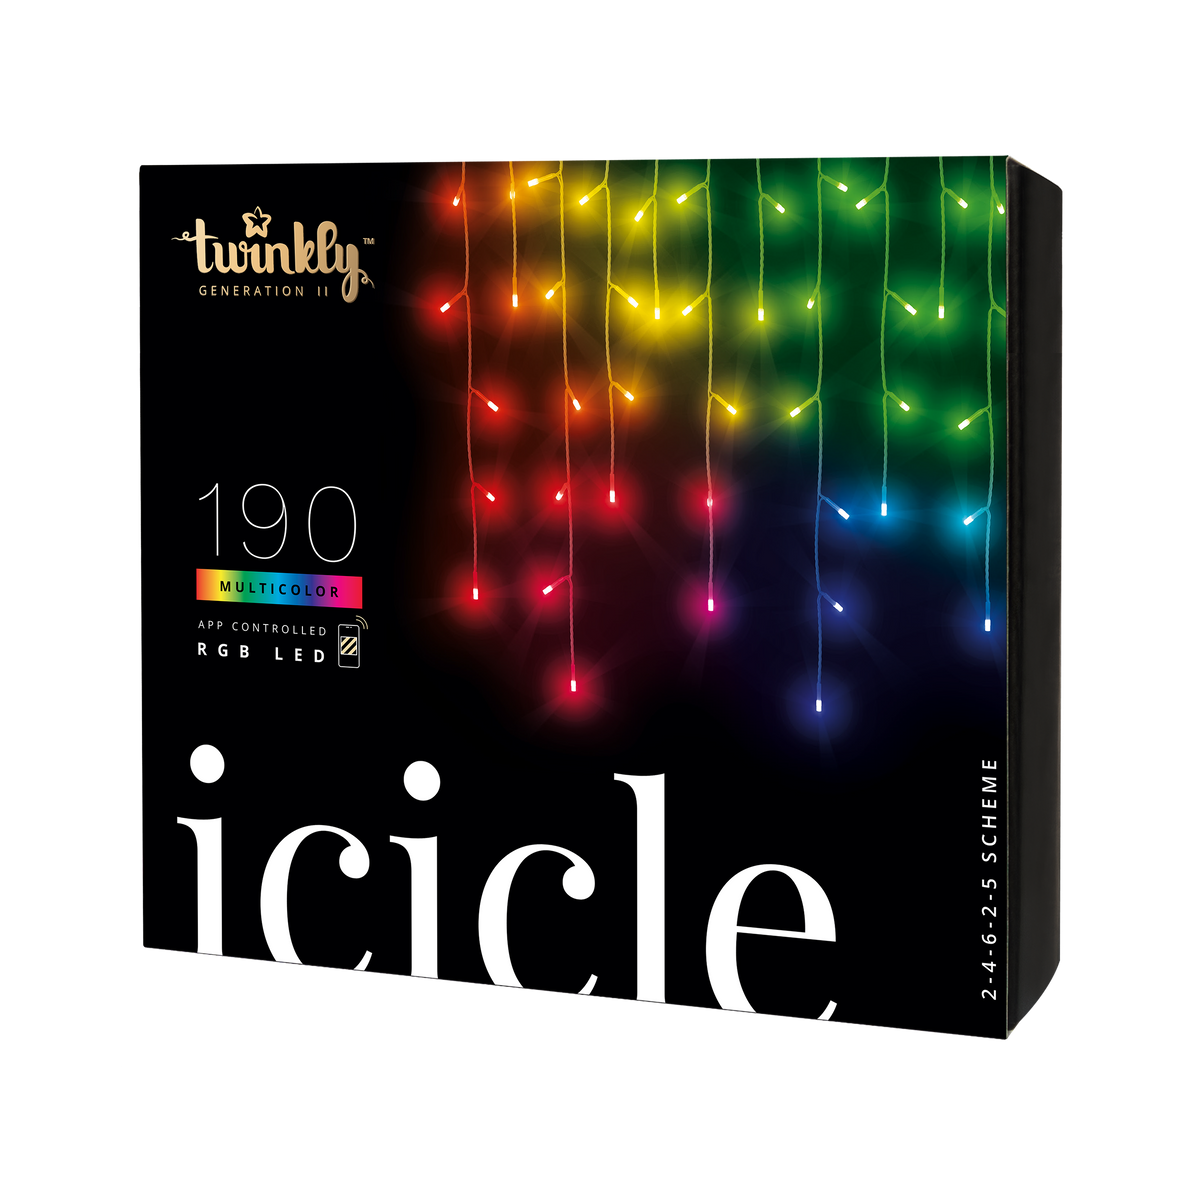 Twinkly ICICLE Luci di Natale Smart 190 Led RGB II Generazione